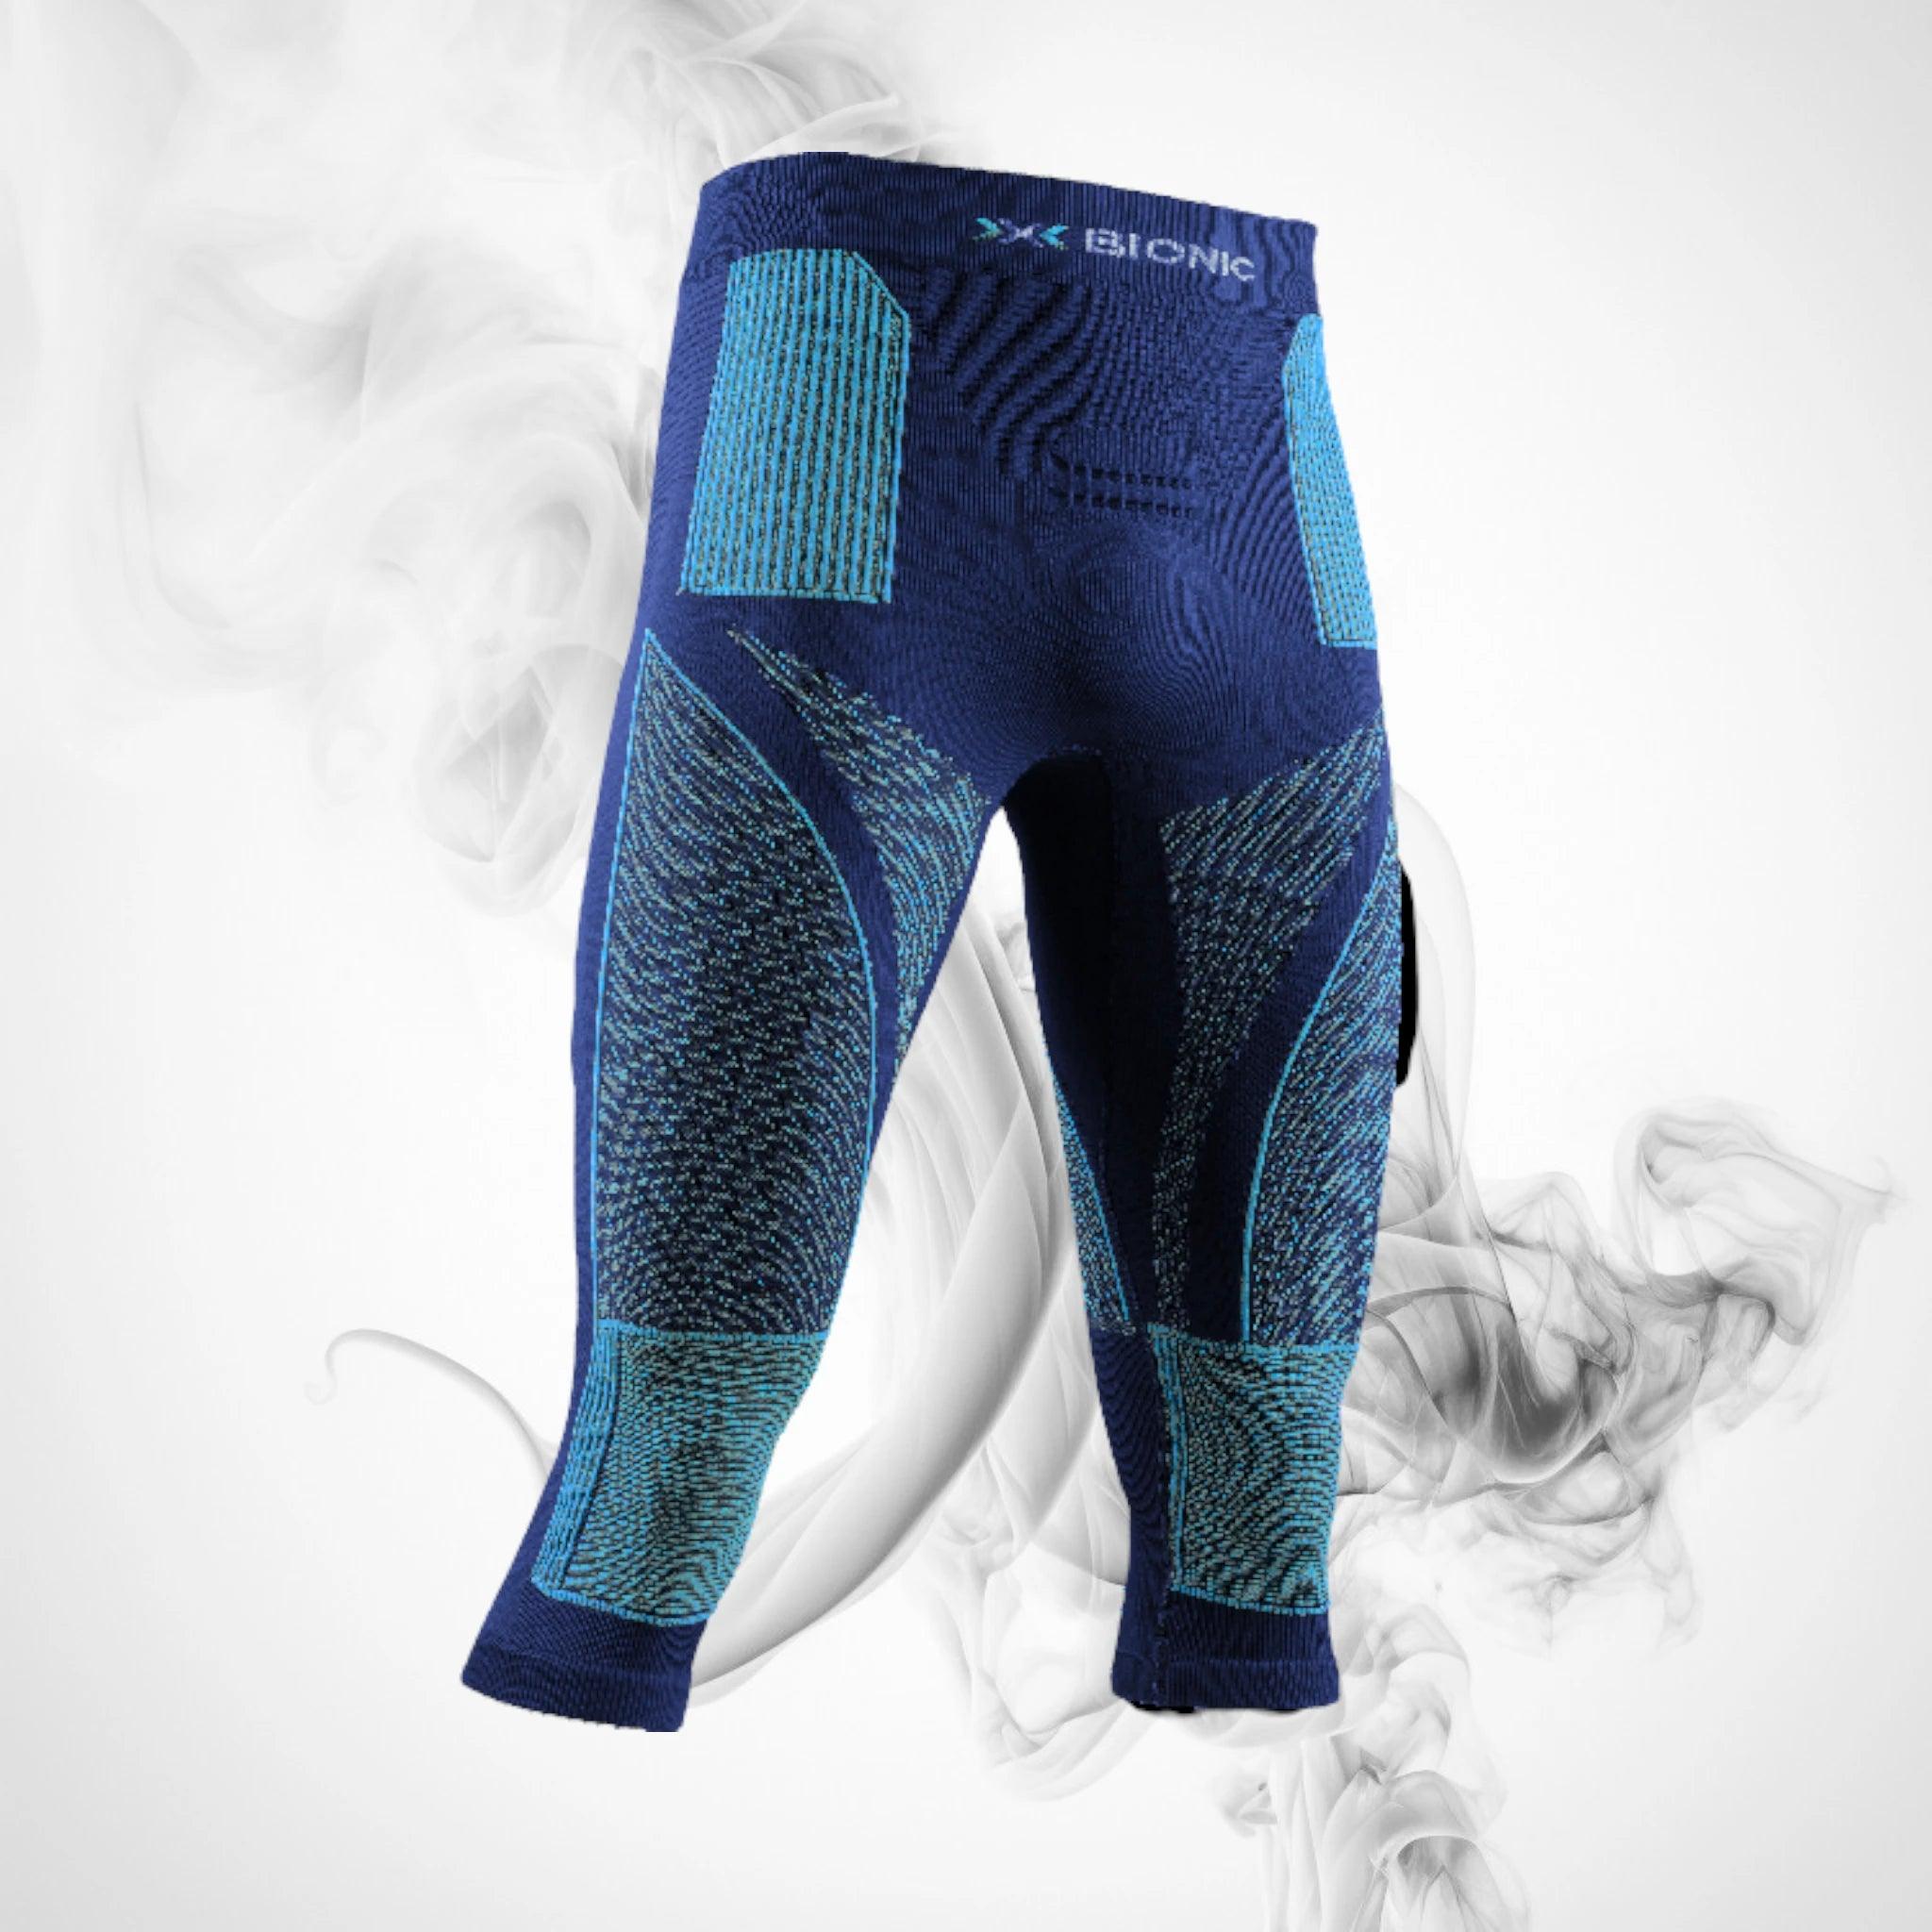 Ski Thermal underwear X-bionic Energy Accumulator 4.0 Pants 3/4 Men Navy/Blue - 2023/24 - Dash Racegear Dash Racegear, Thermal Wear underwear